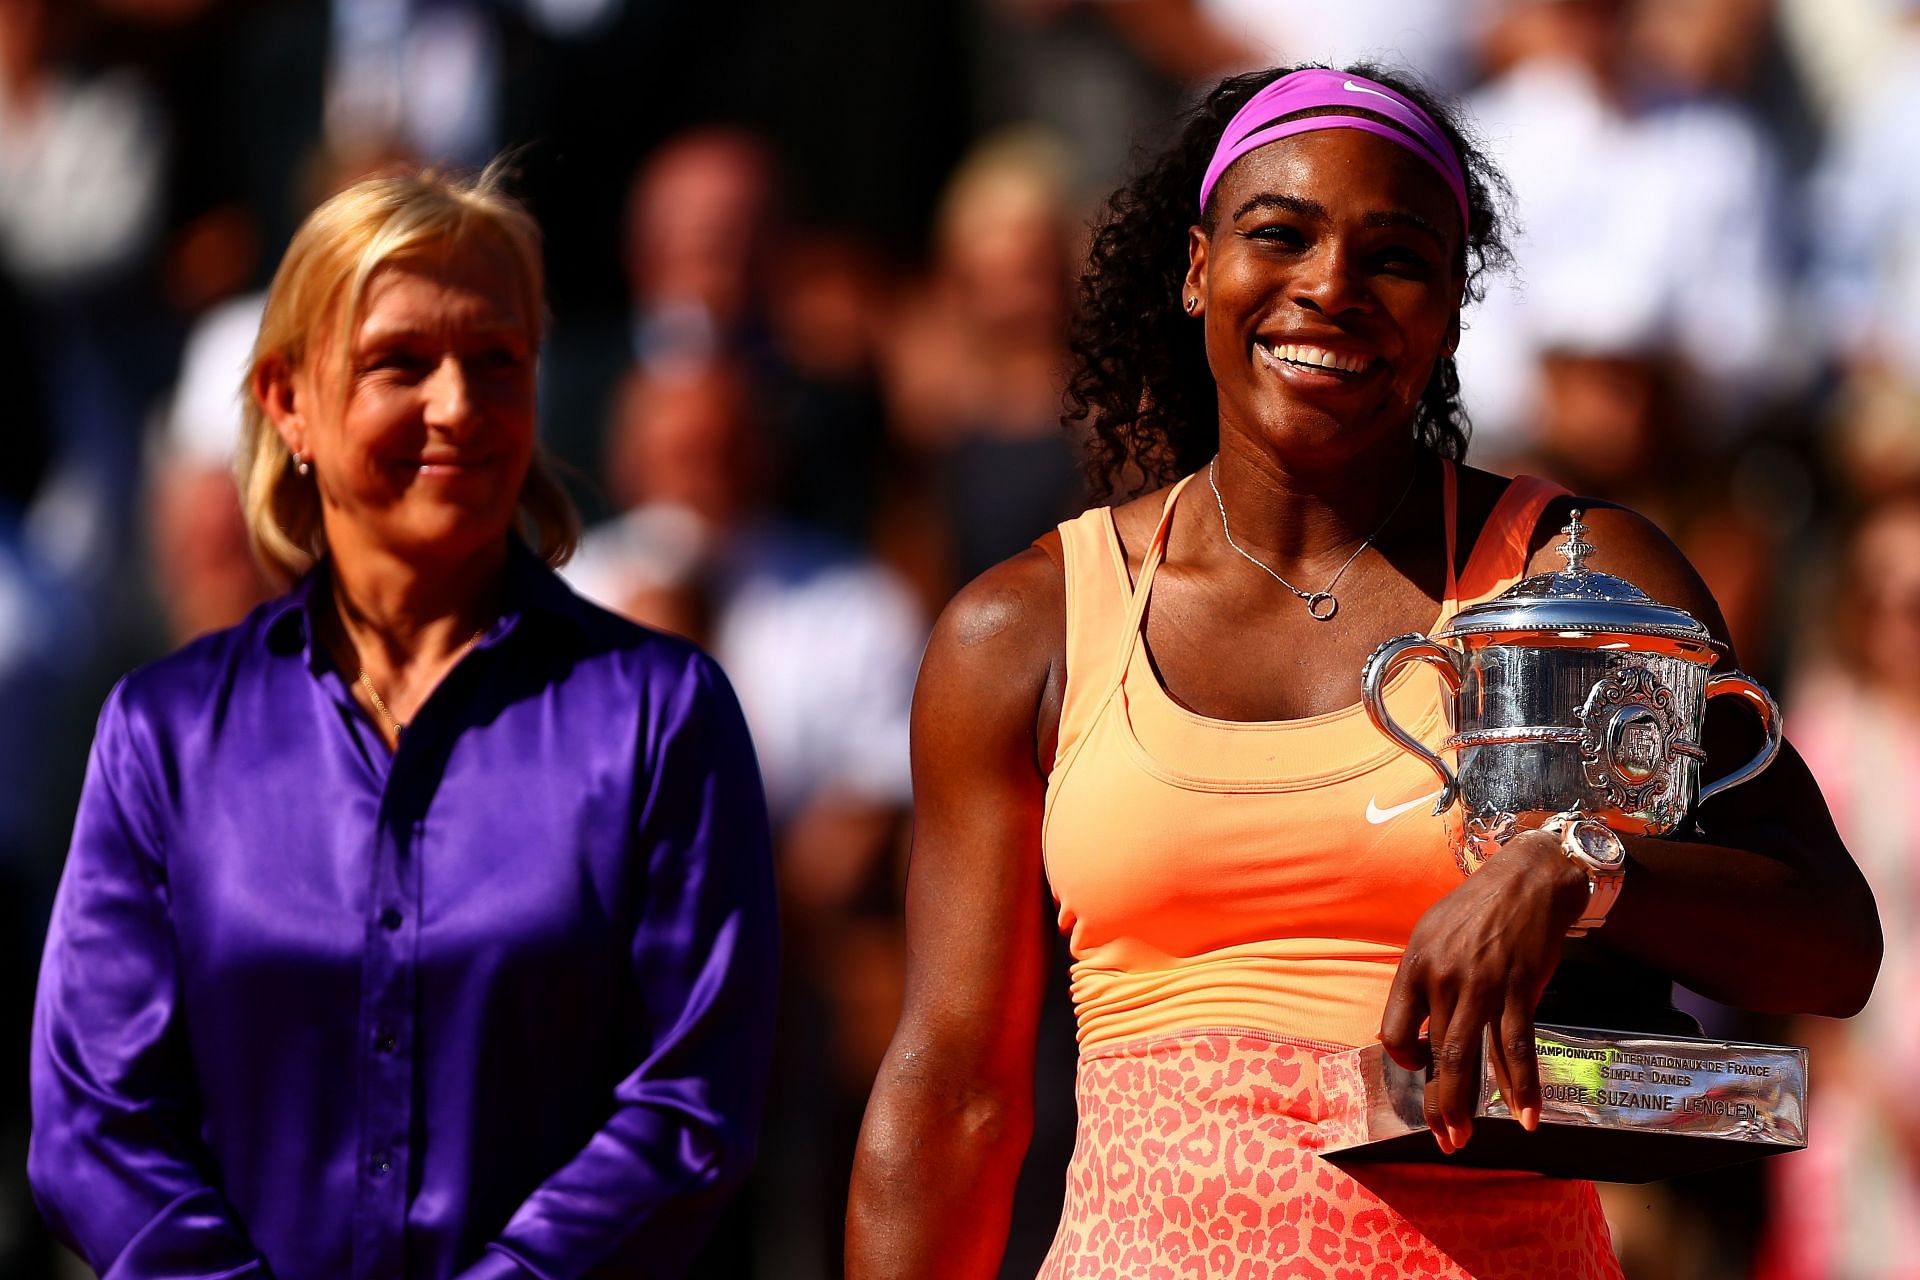 Martina Navratilova and Serena Williams at the 2015 French Open.